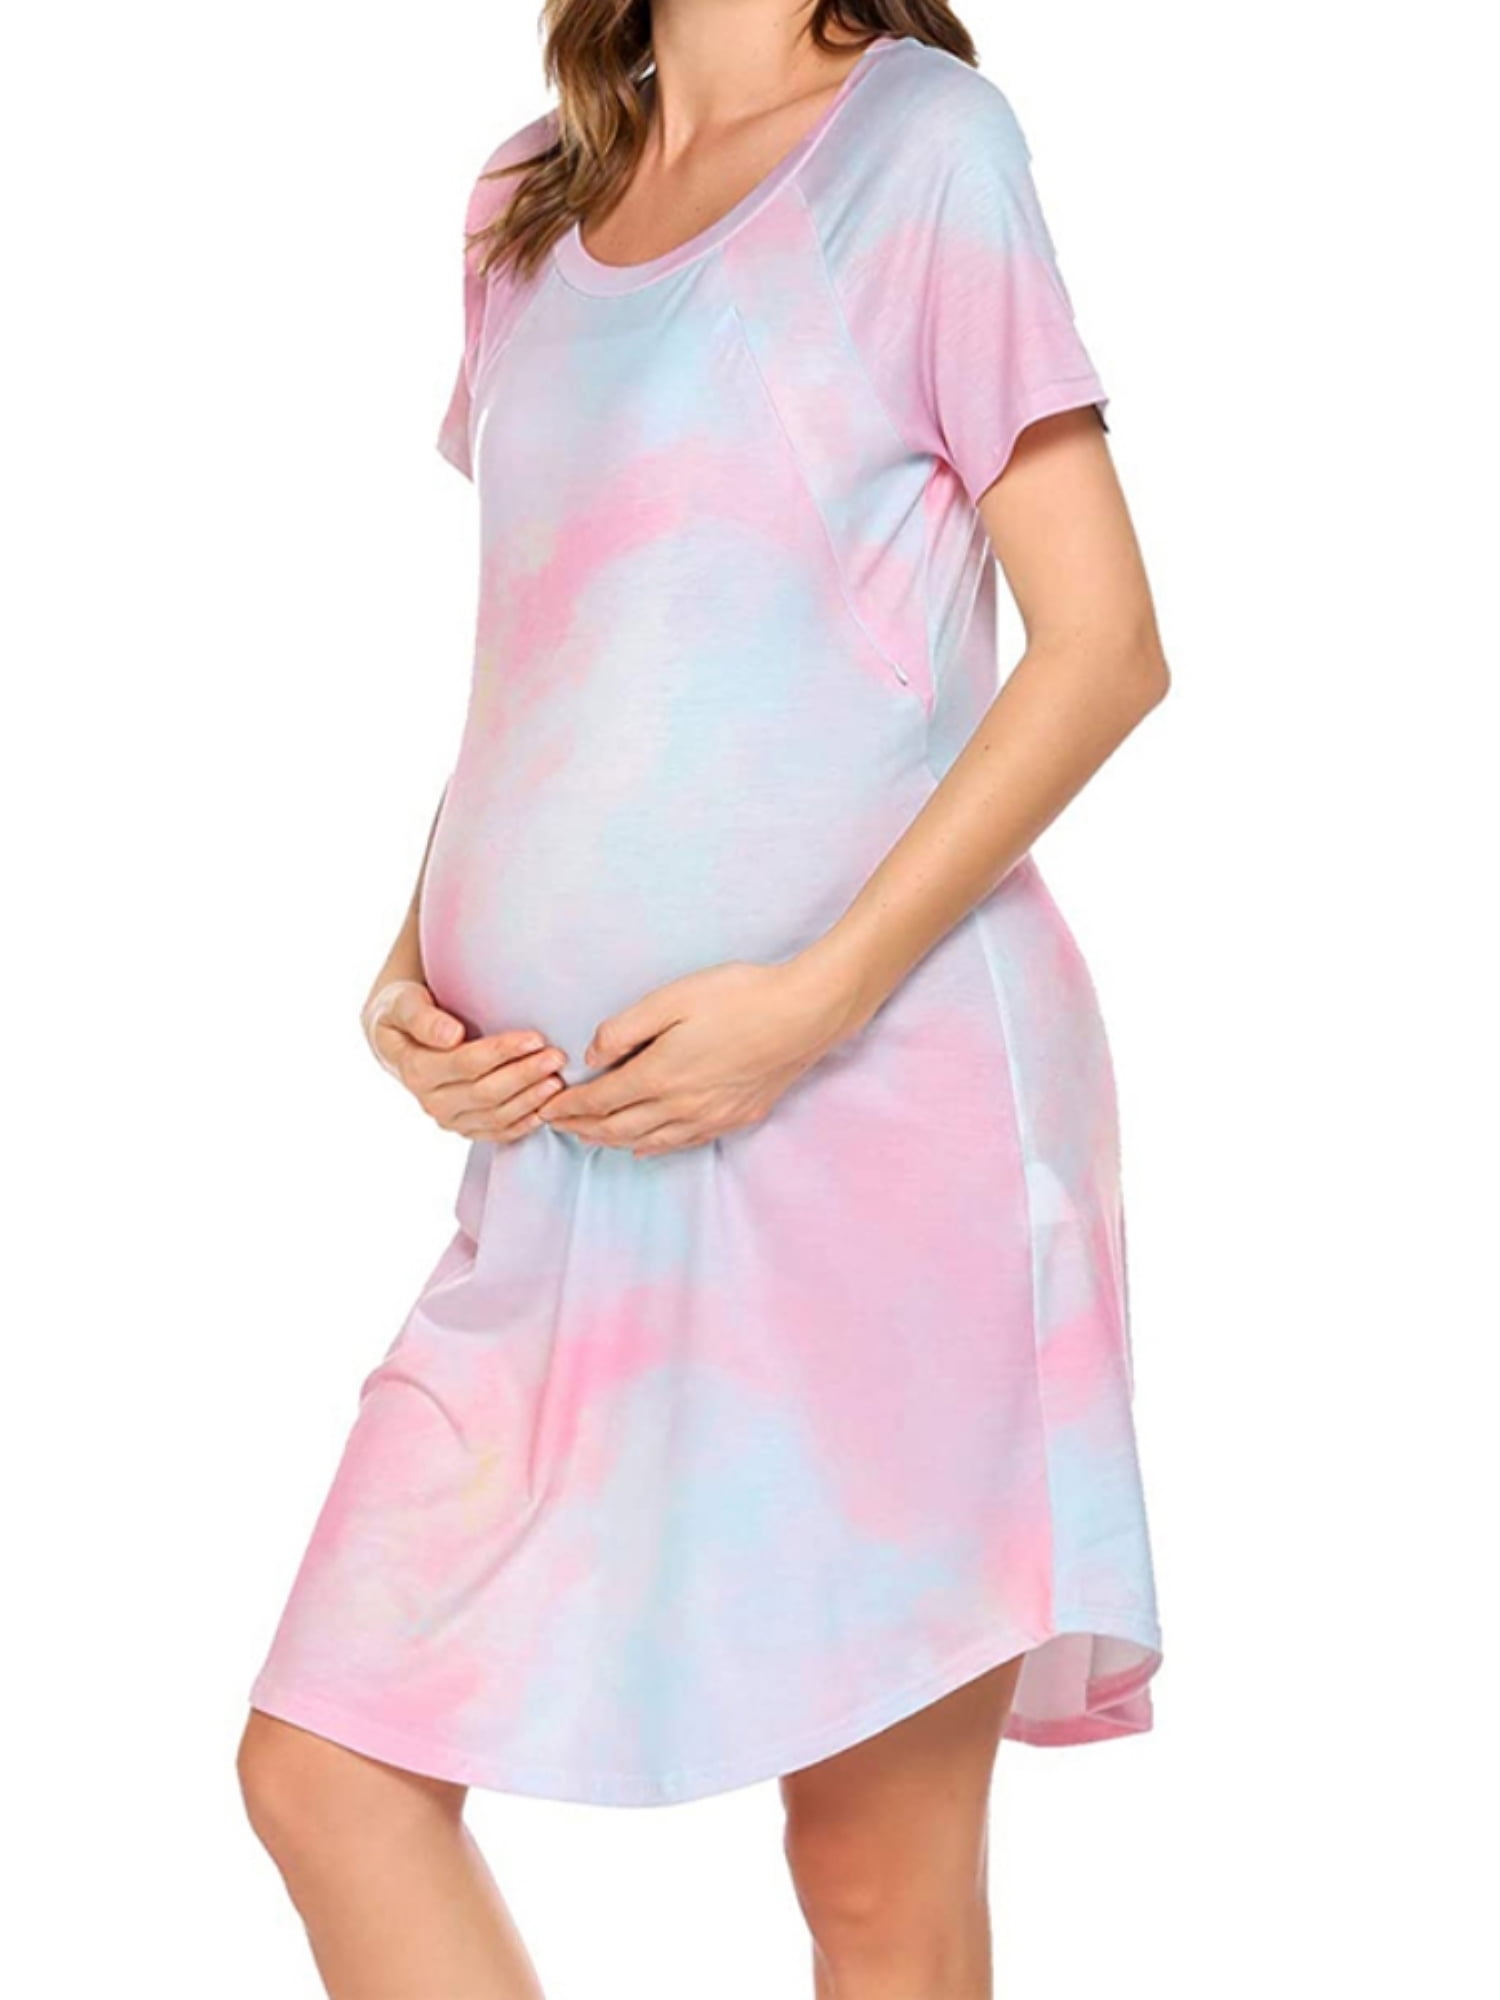 Women Sleepshirts 3 in 1 Labor/Maternity/Nursing Nightgown Short Sleeve Tie  Dye Dress,Invisible Side Open Breastfeeding Nightgown Hospital  Gown,Irregular Full Slip Knee Length Sleepdress,S-2XL Pink 